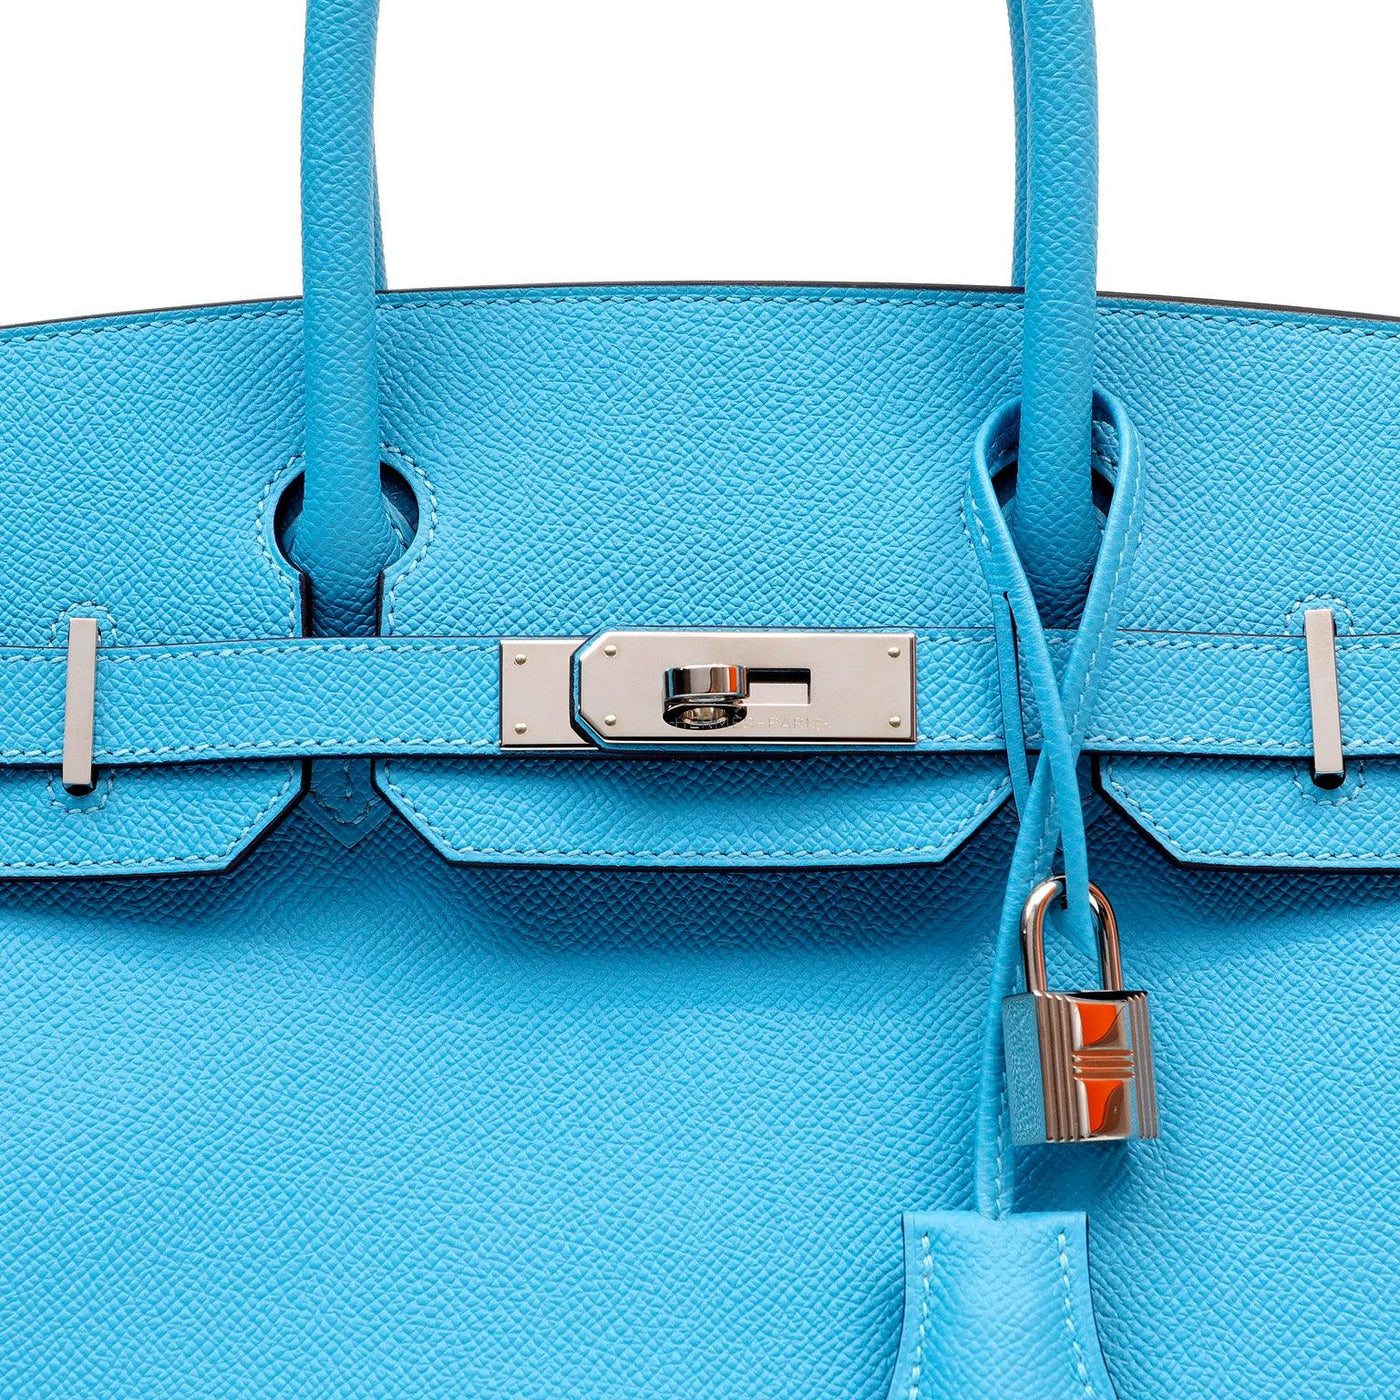 Hermès Birkin 30 Blue Sapphire Epsom Palladium Hardware – Coco Approved  Studio